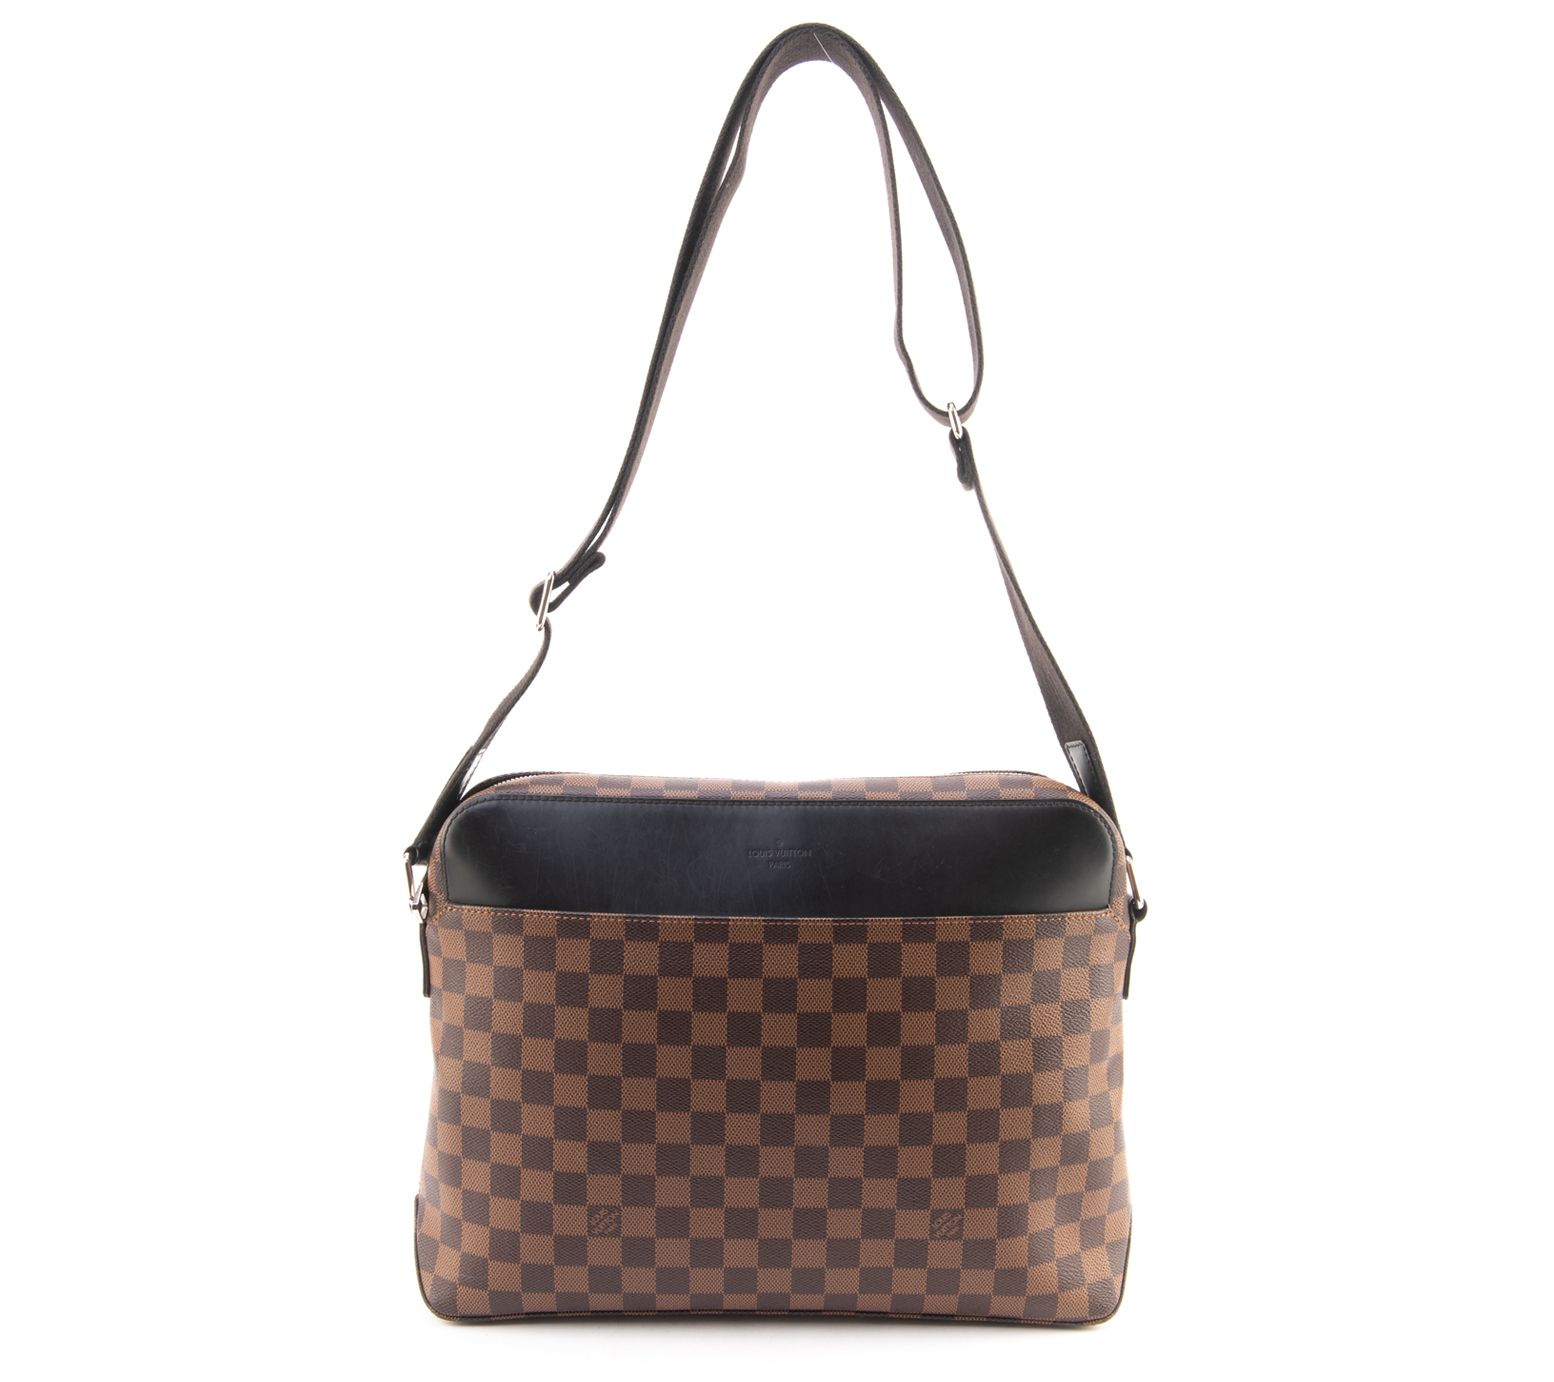 Pre-Owned Louis Vuitton Jake Messenger Damier Crossbody Bag 